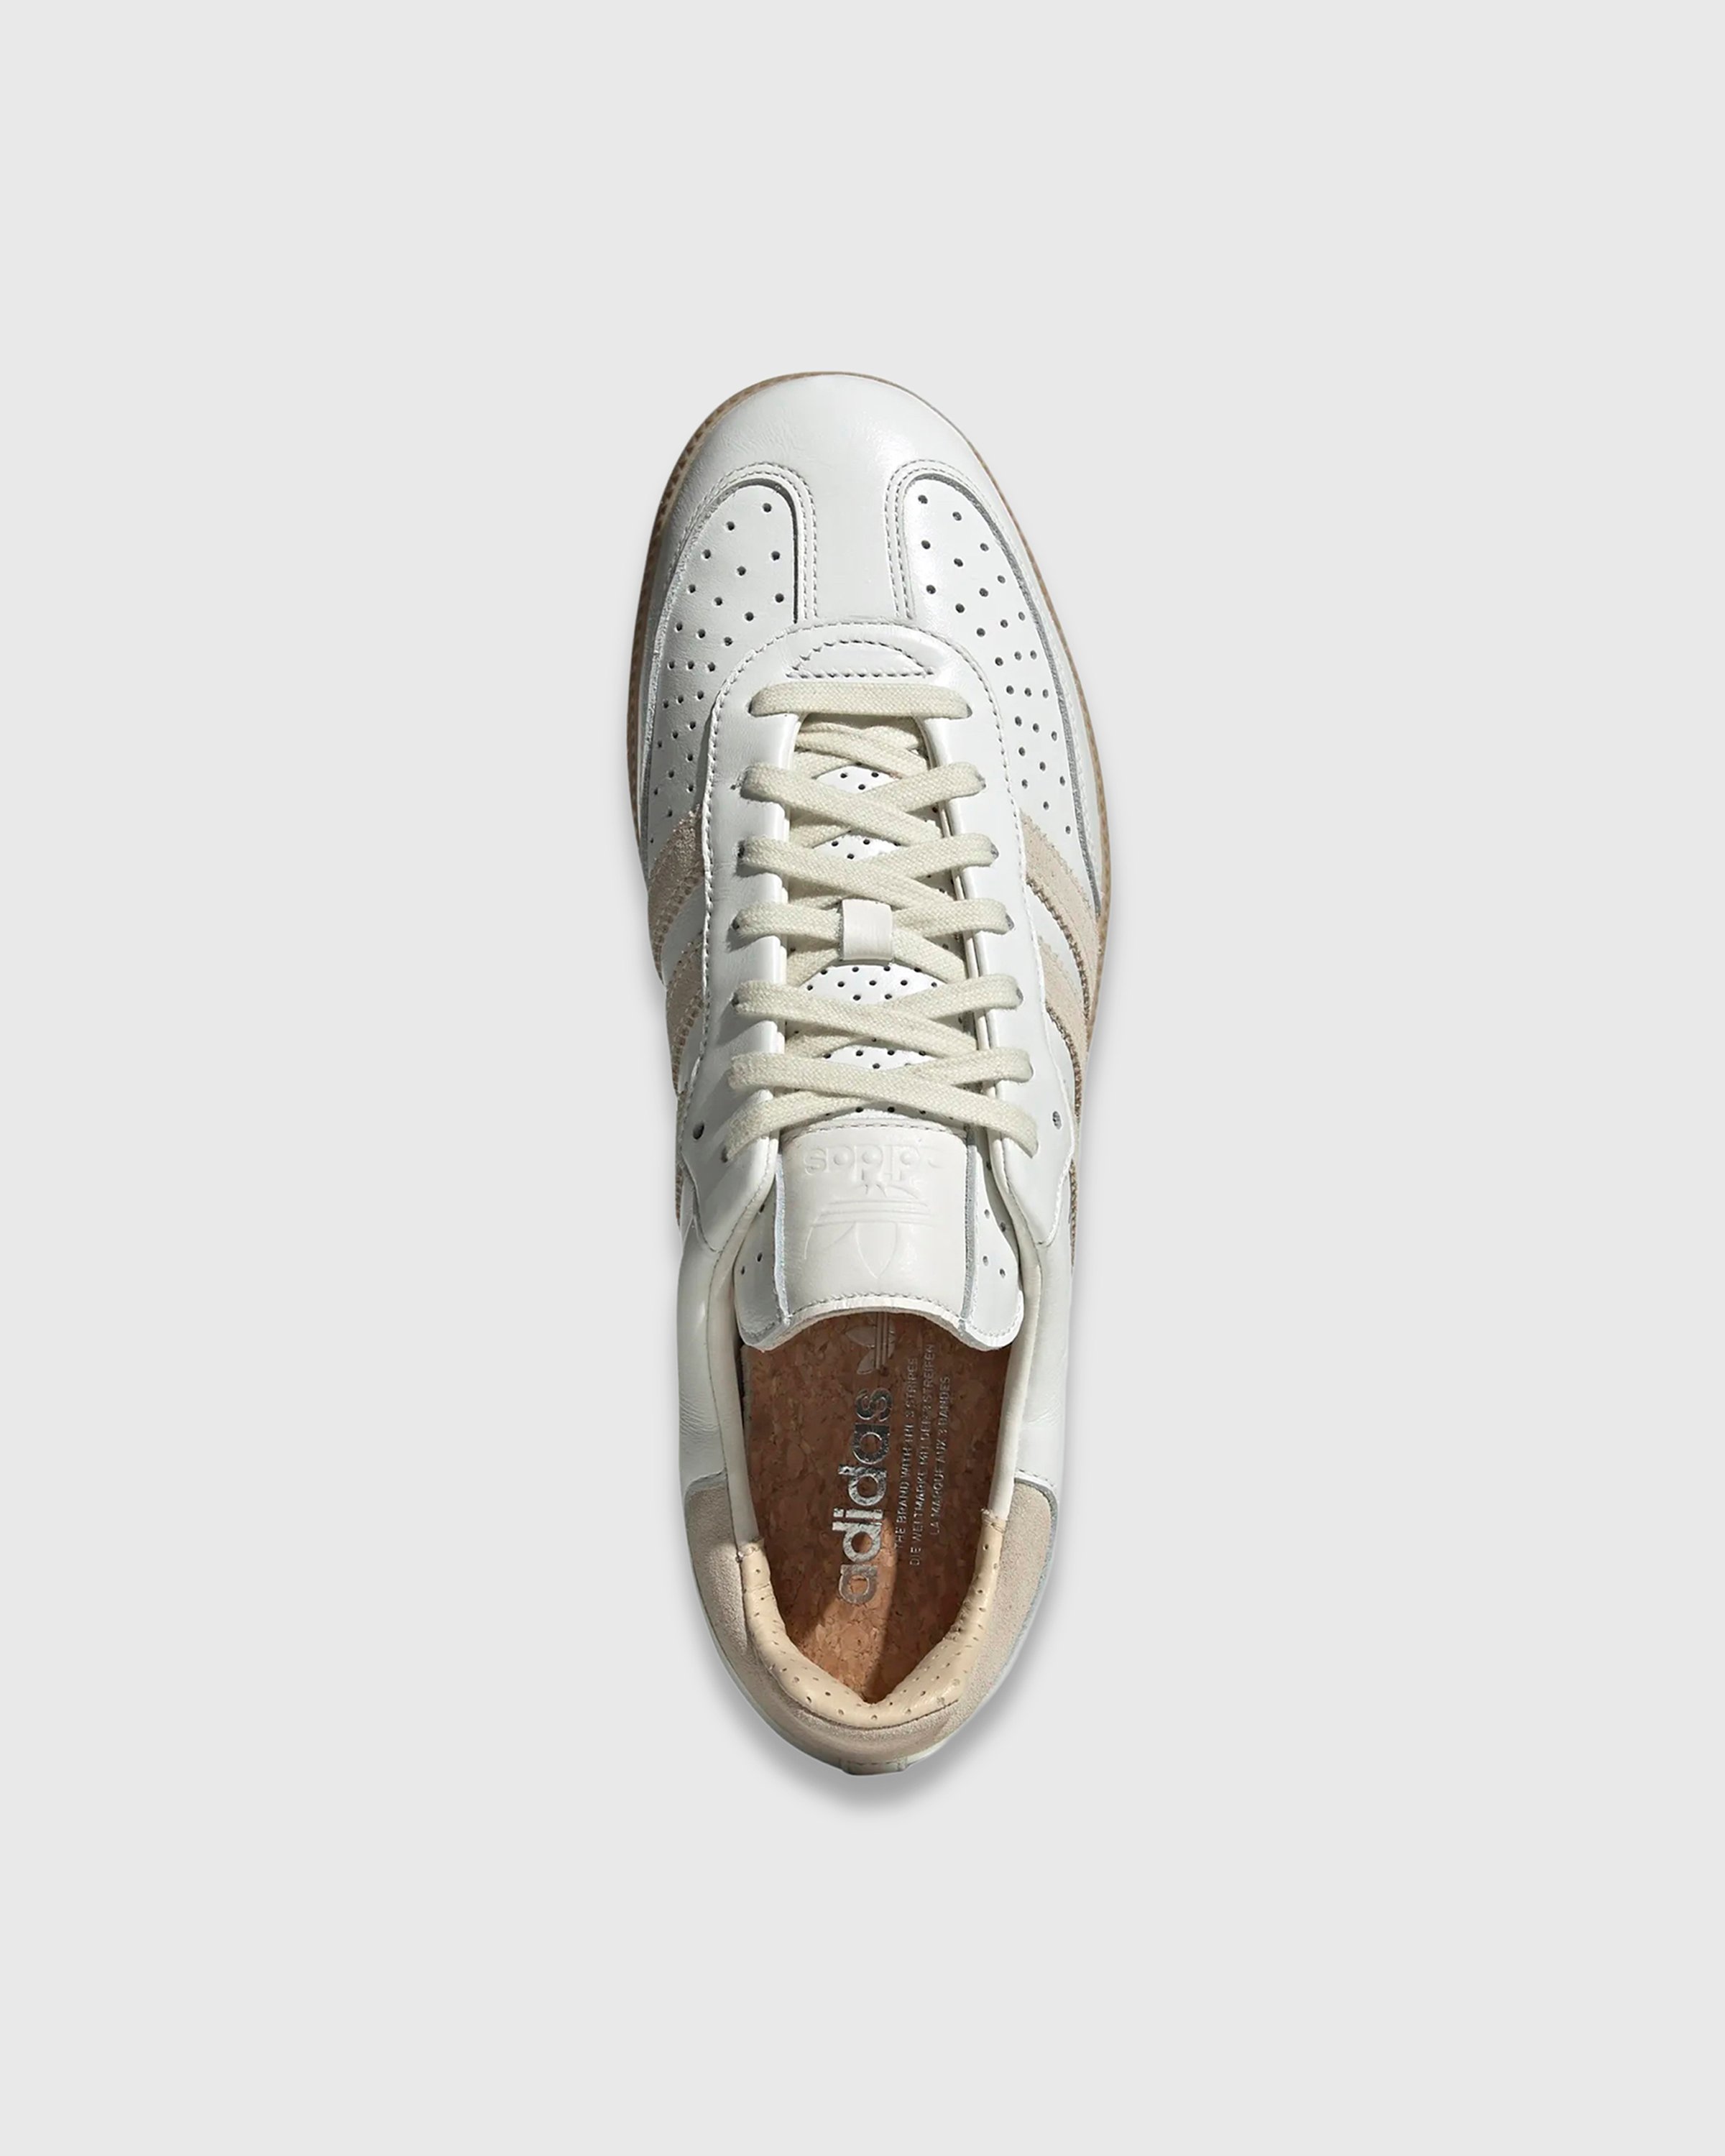 Adidas - SAMBA OG            CWHITE/WONWHI/MAGBEI - Footwear - White - Image 5